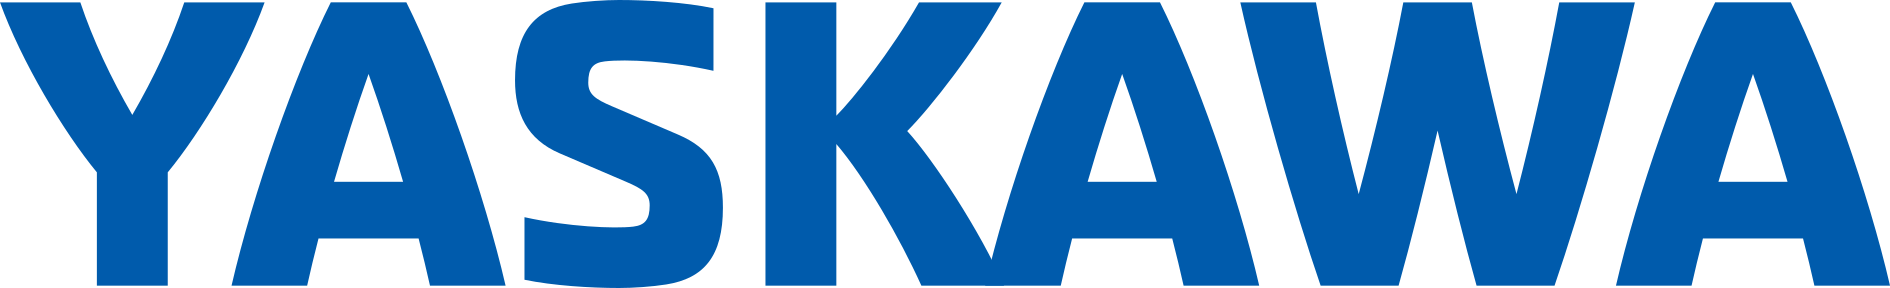 YASKAWA-logo-blue.png